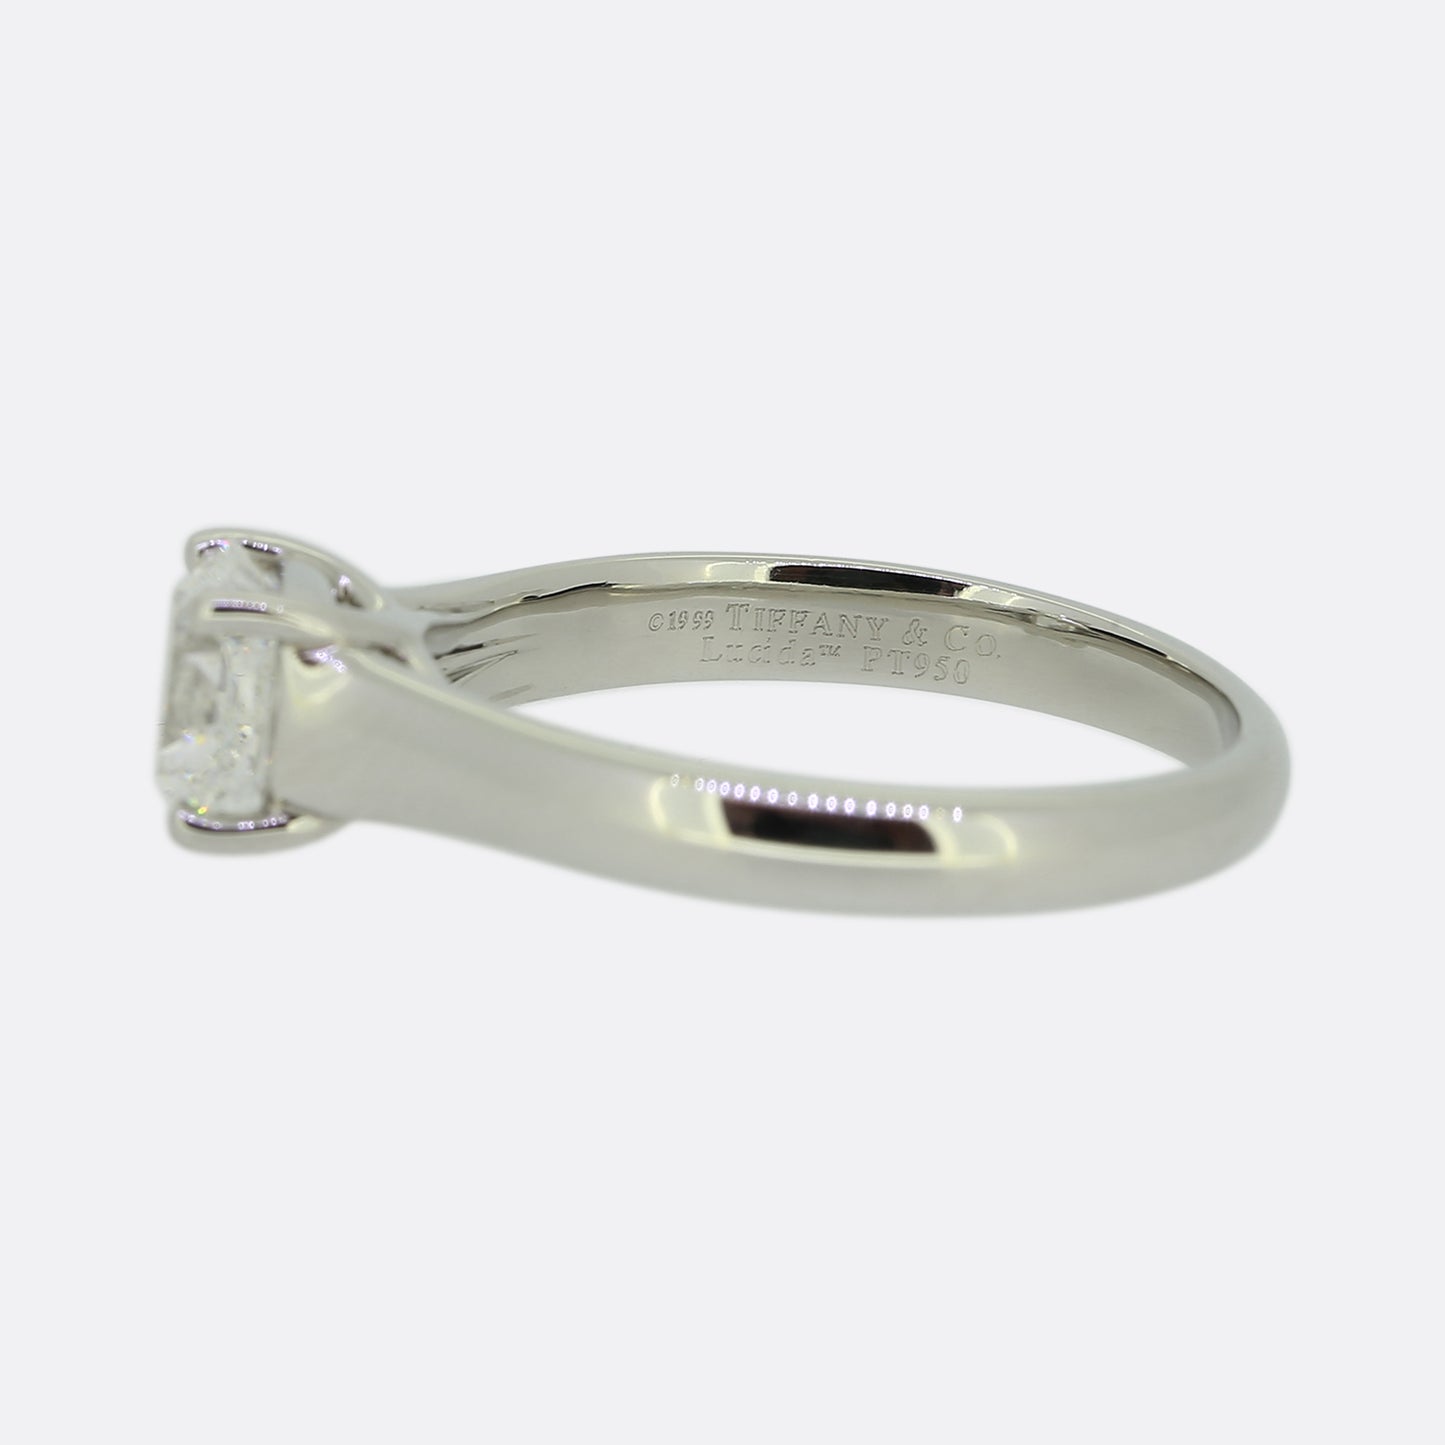 Tiffany & Co. 0.88 Carat Lucida Cut Diamond Solitaire Ring